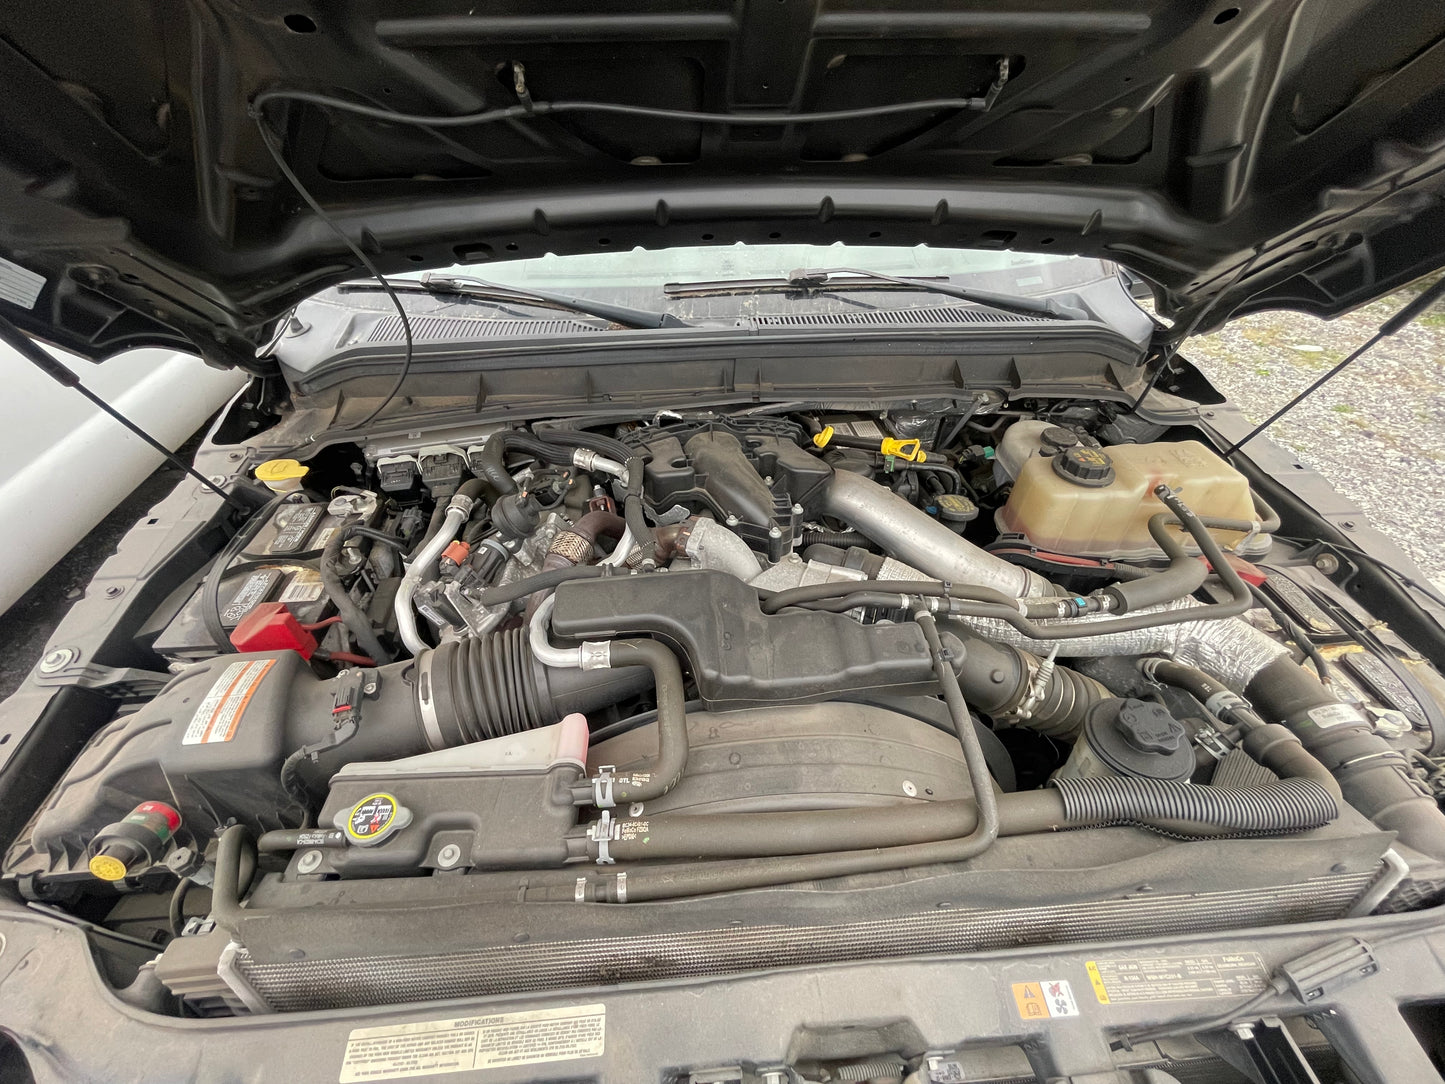 2014 Ford Superduty 6.7 Powerstroke Engine 137k Miles #1051